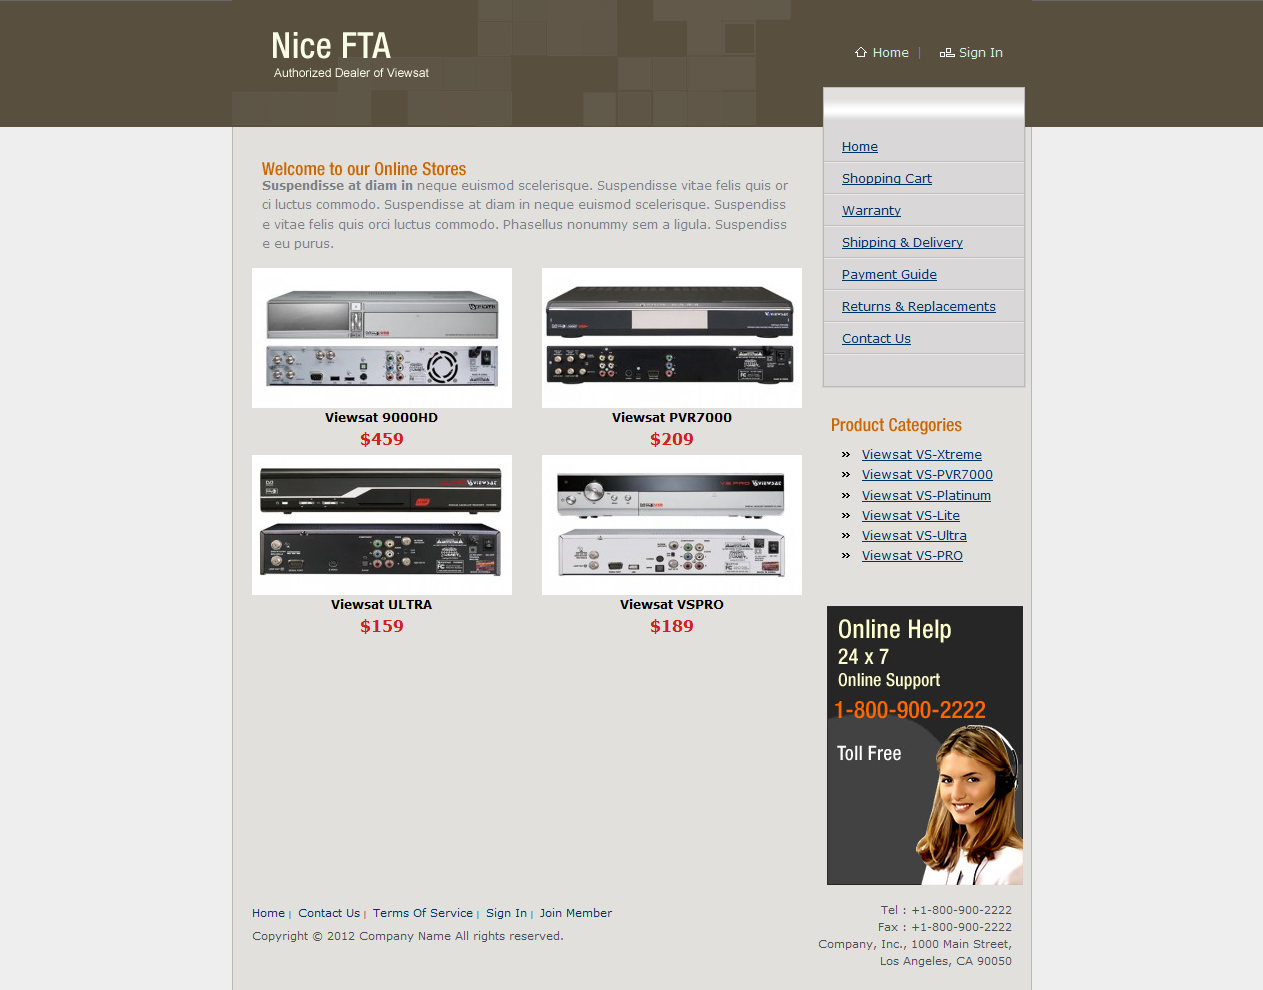 FireShot Screen Capture #124 - 'Nice FTA_com Viewsat' - nicefta_bkihost6_com_zver1.png